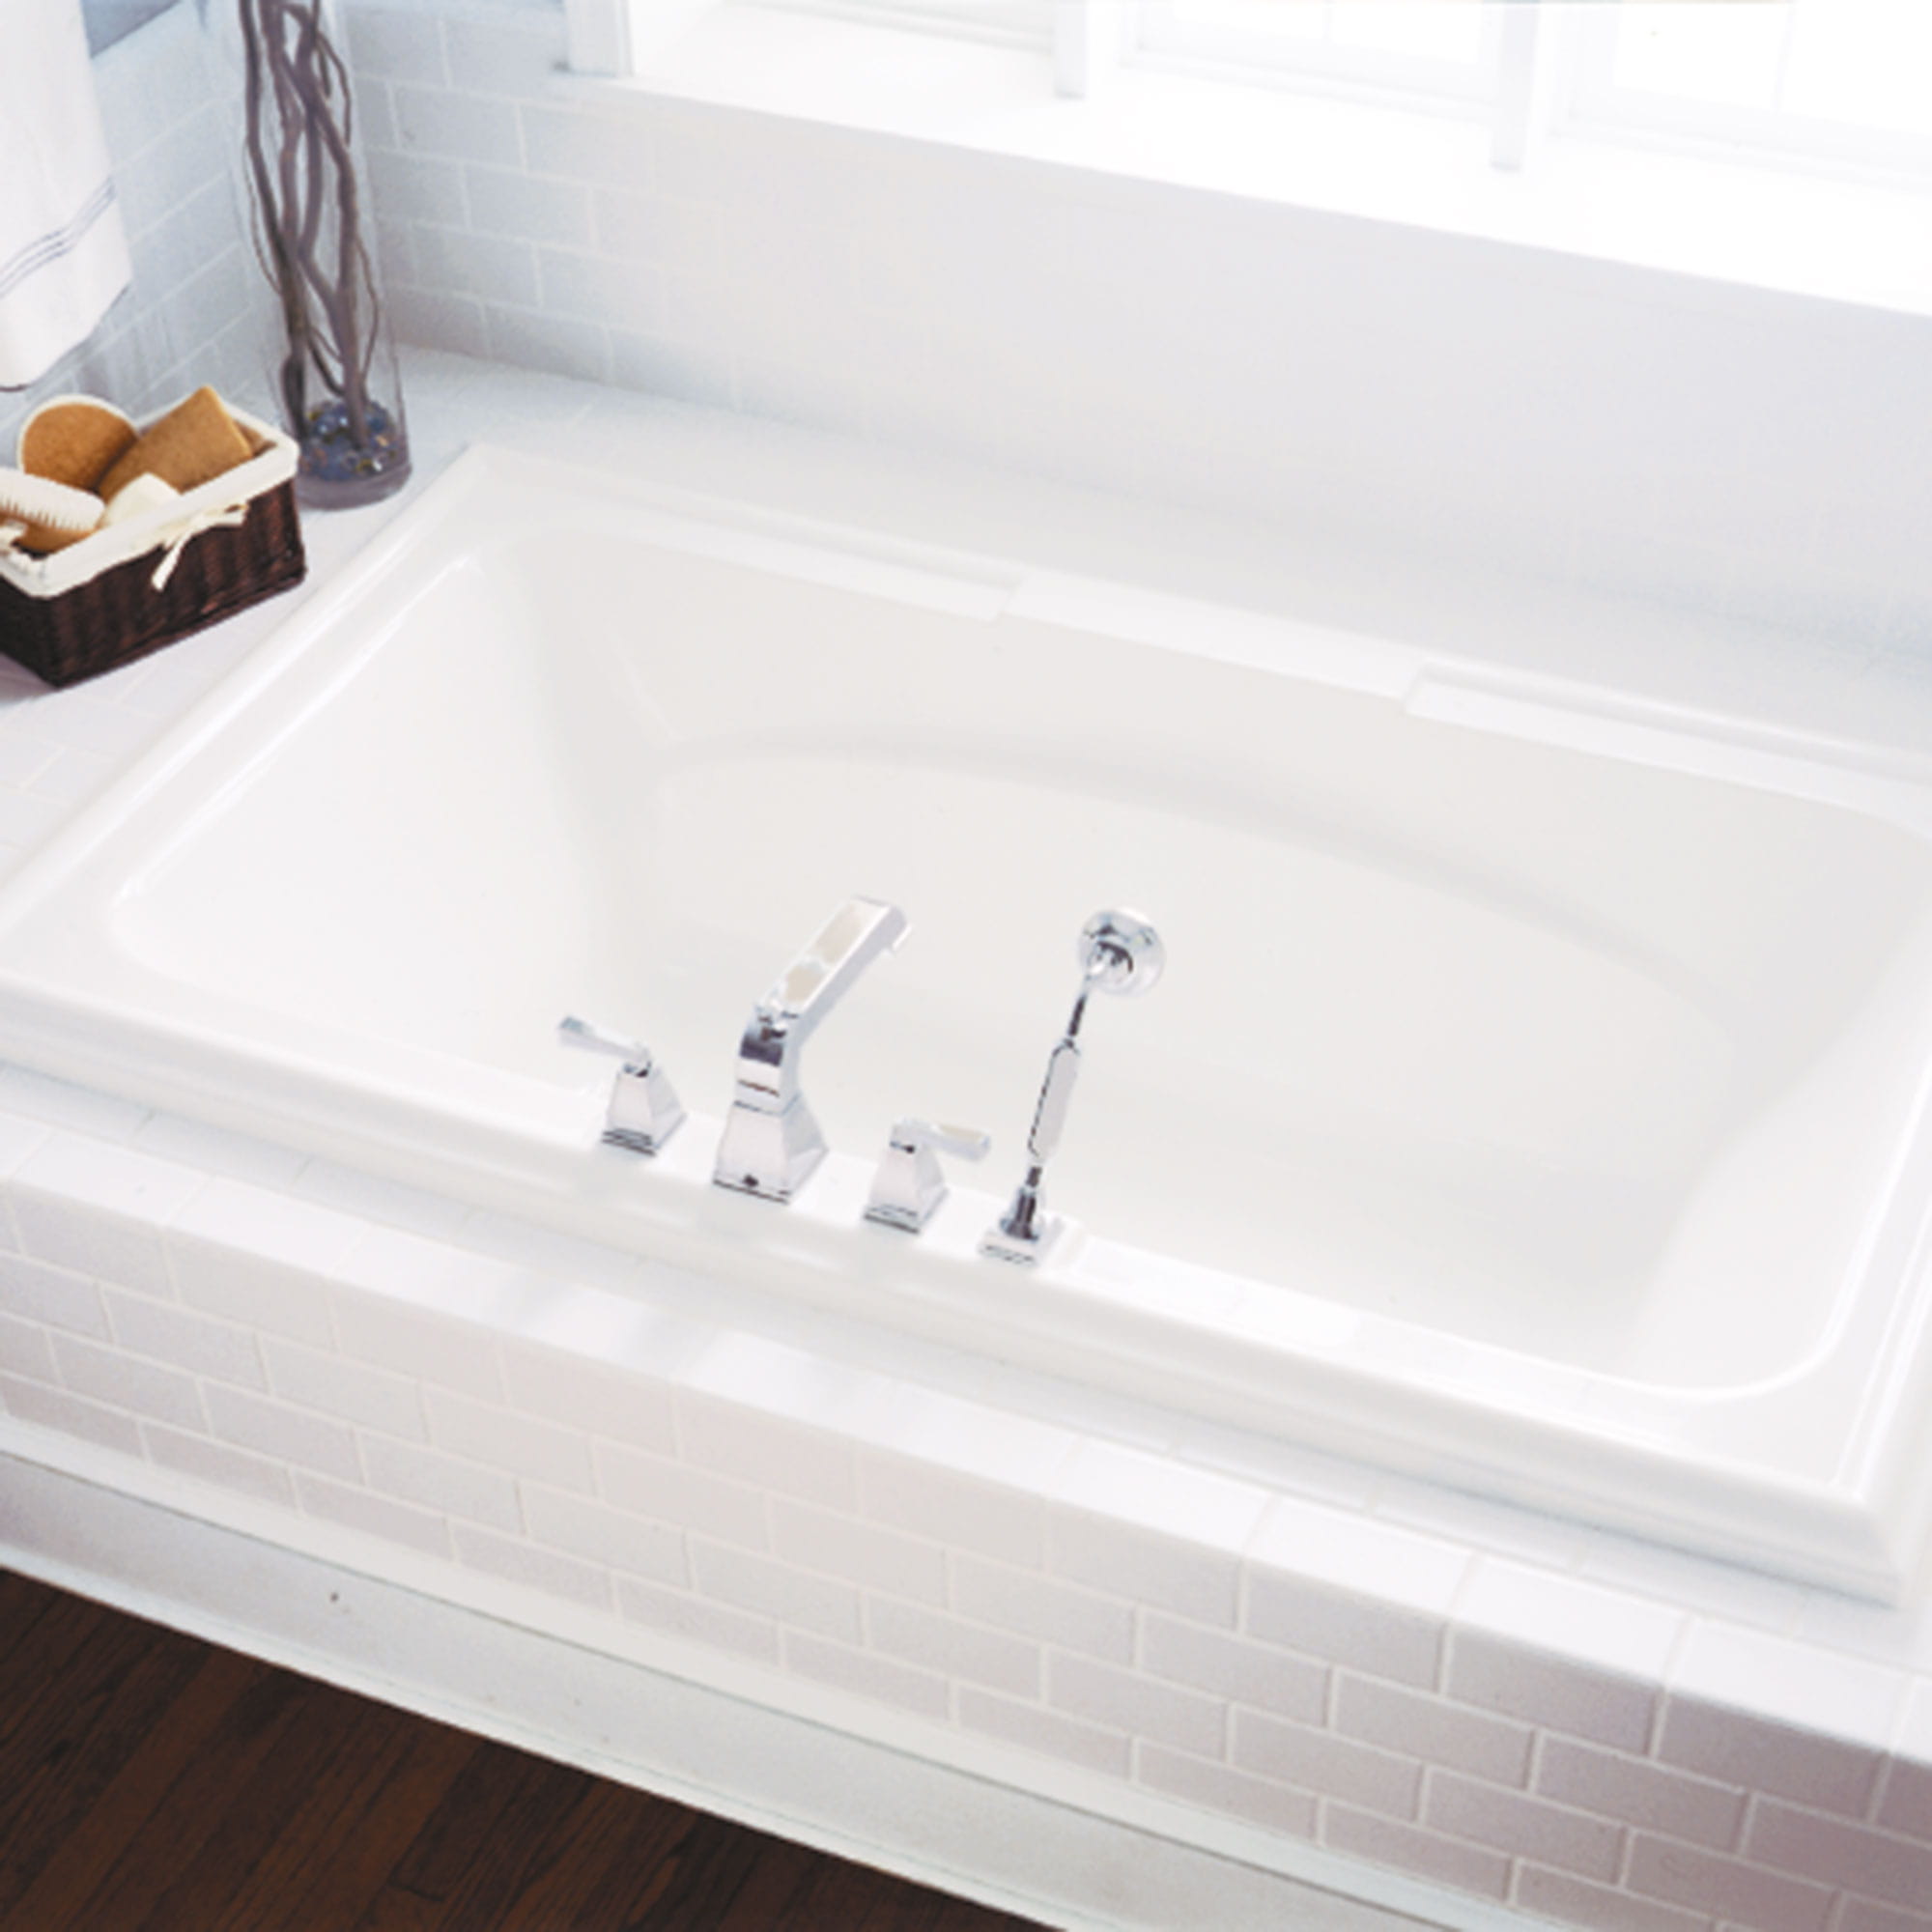 Town Square 72 x 42 Inch Drop In Bathtub With EverClean Air Bath System WHITE